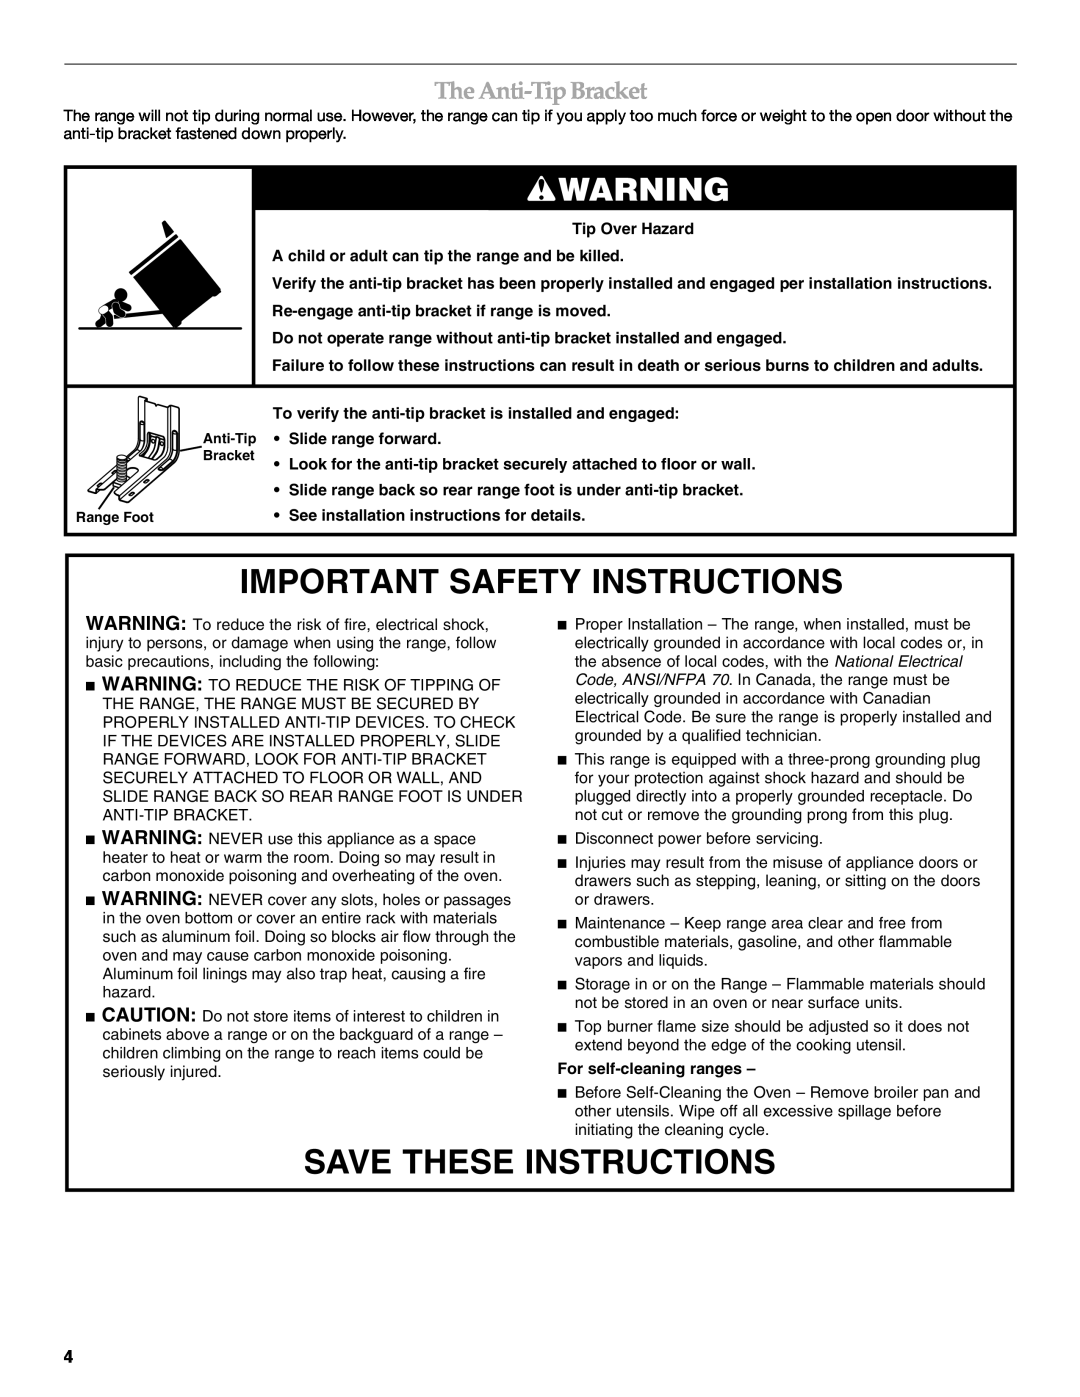 KitchenAid KGSK901 manual The Anti-Tip Bracket, Important Safety Instructions, Save These Instructions, Slide range forward 